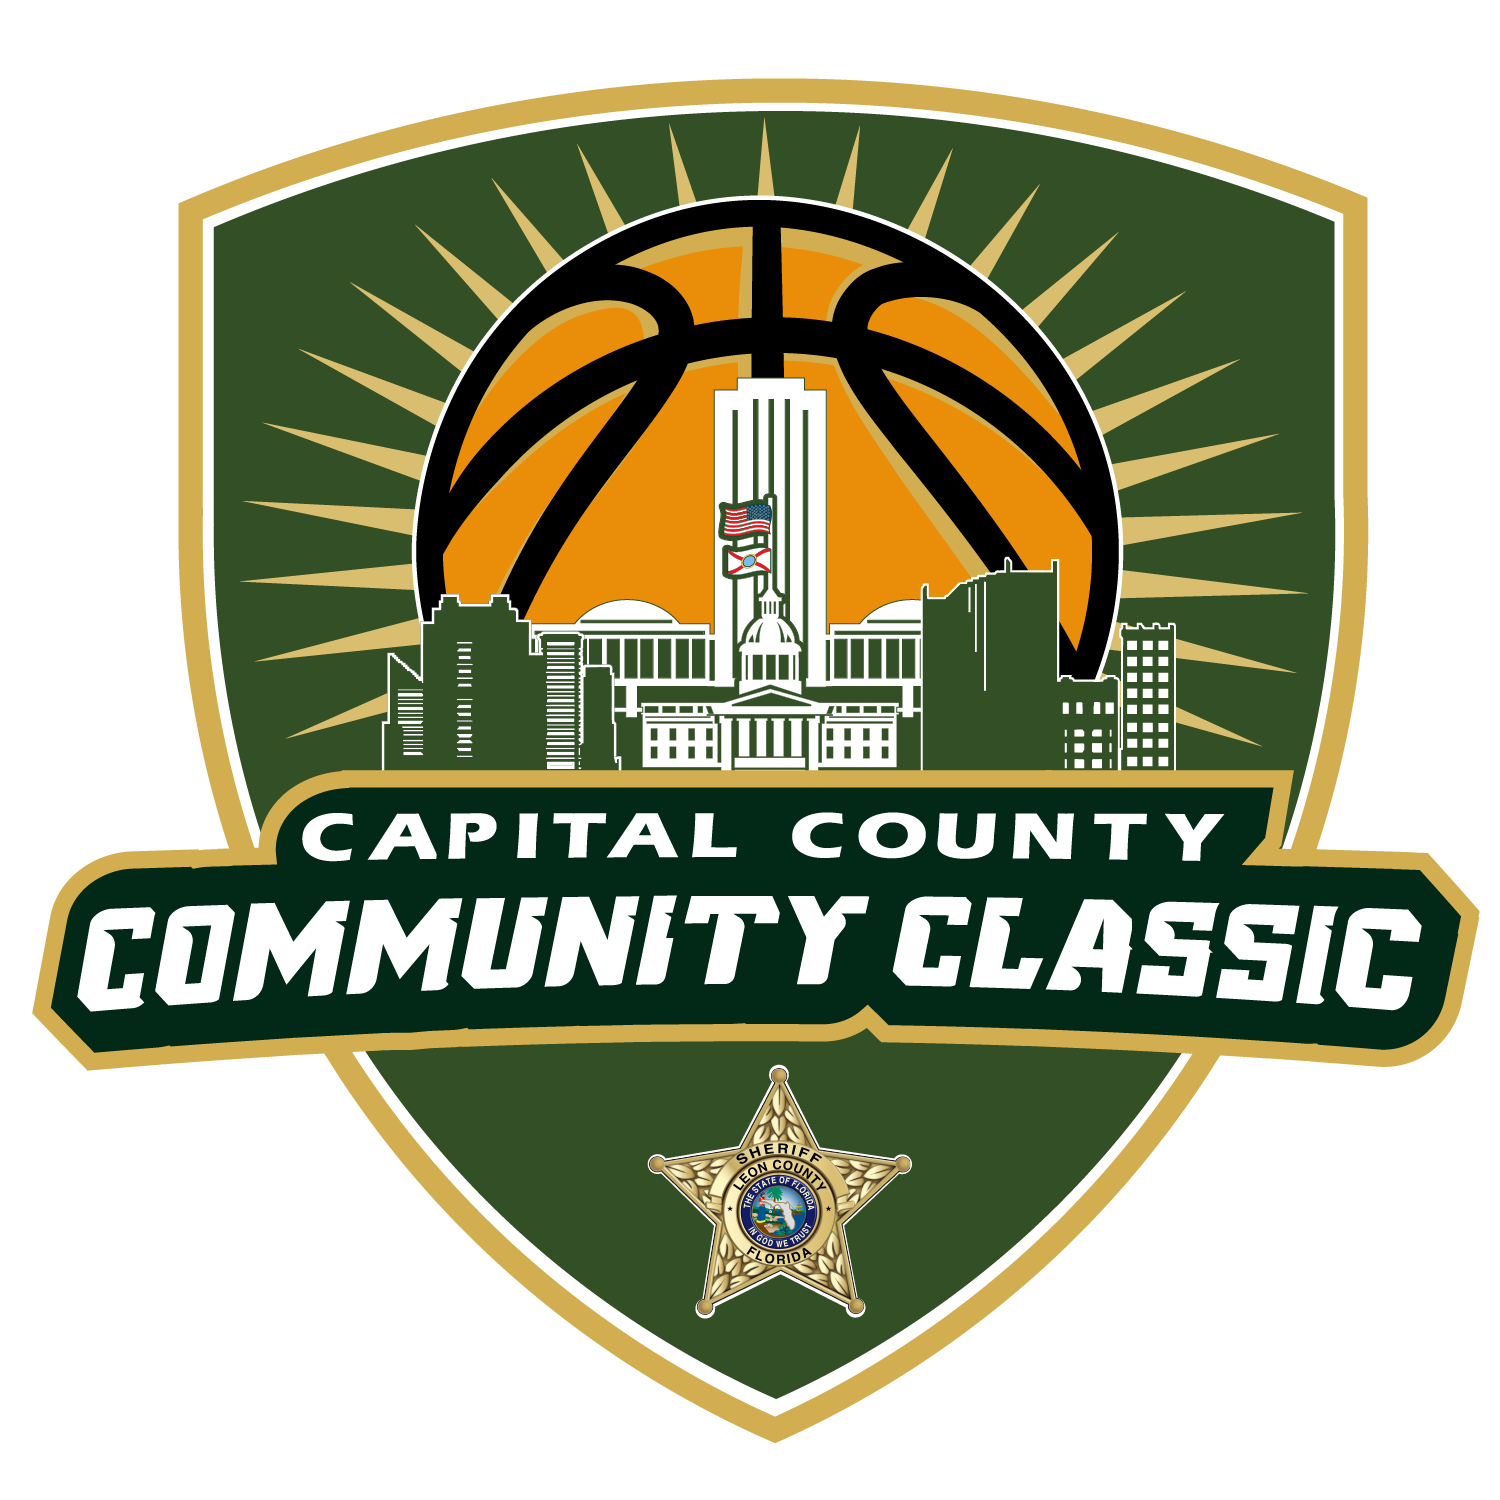 Capital County Community Classic